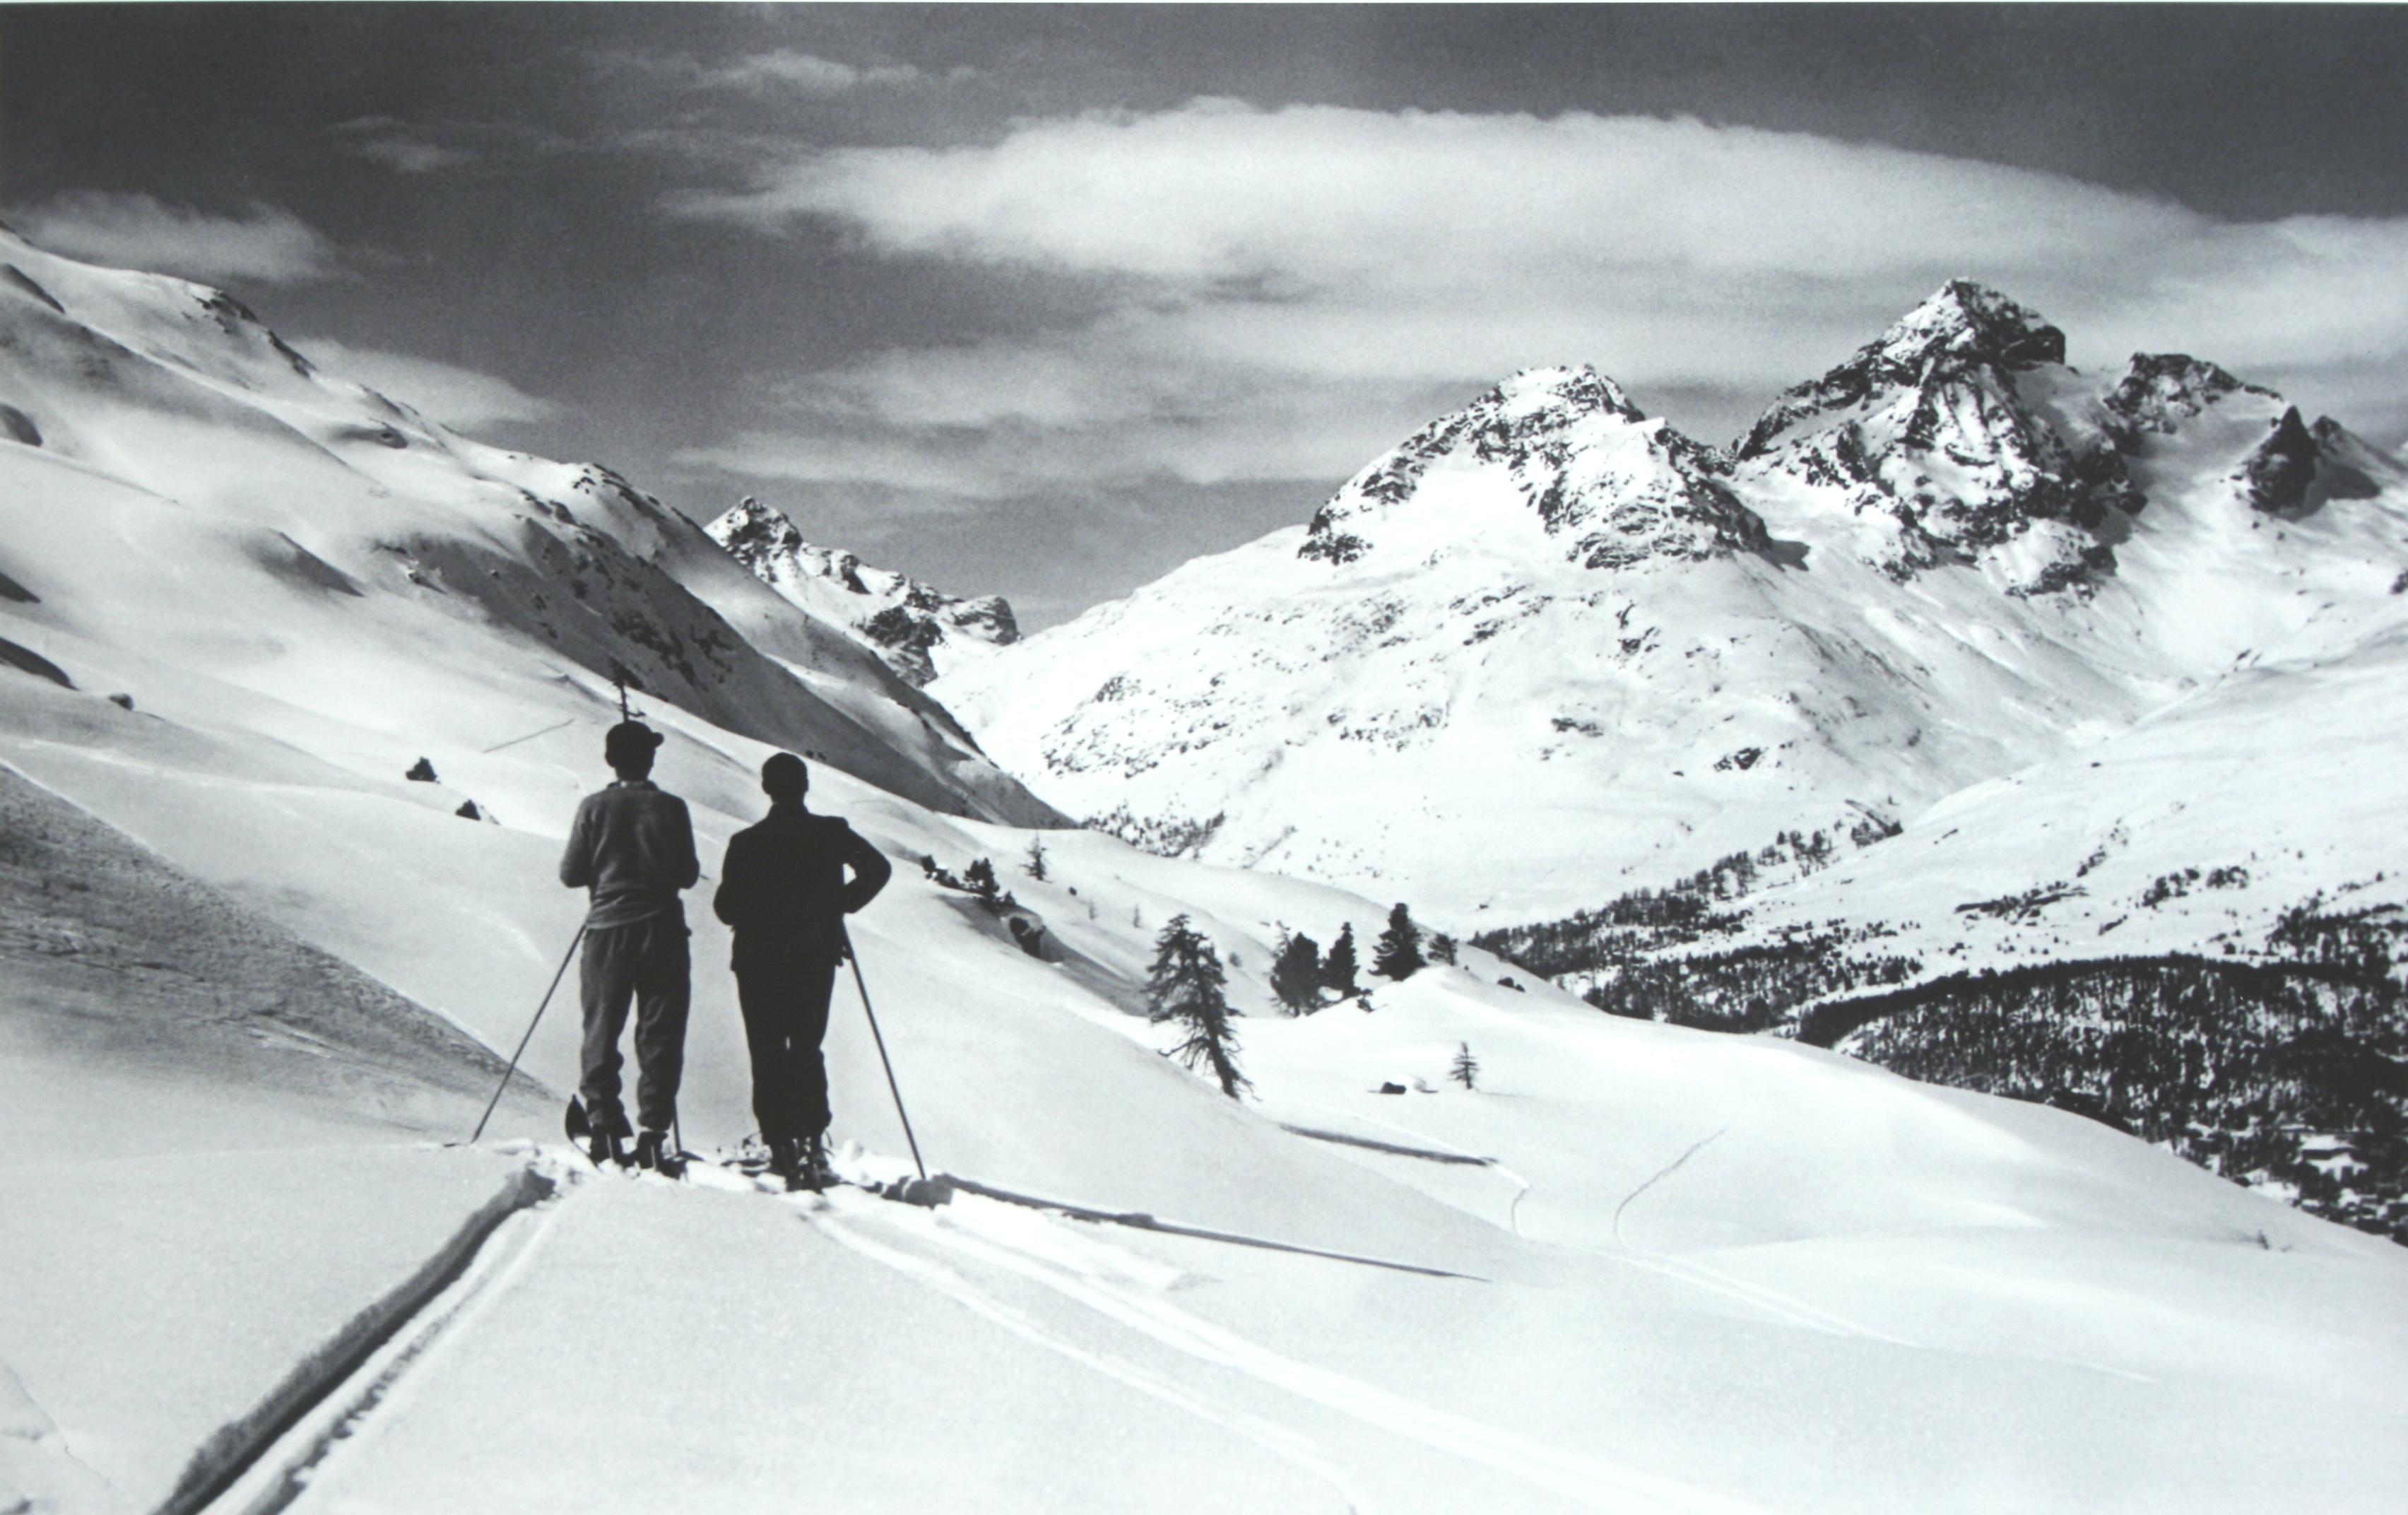 Vintage, ancienne photographie de ski alpin.
Panoramic View